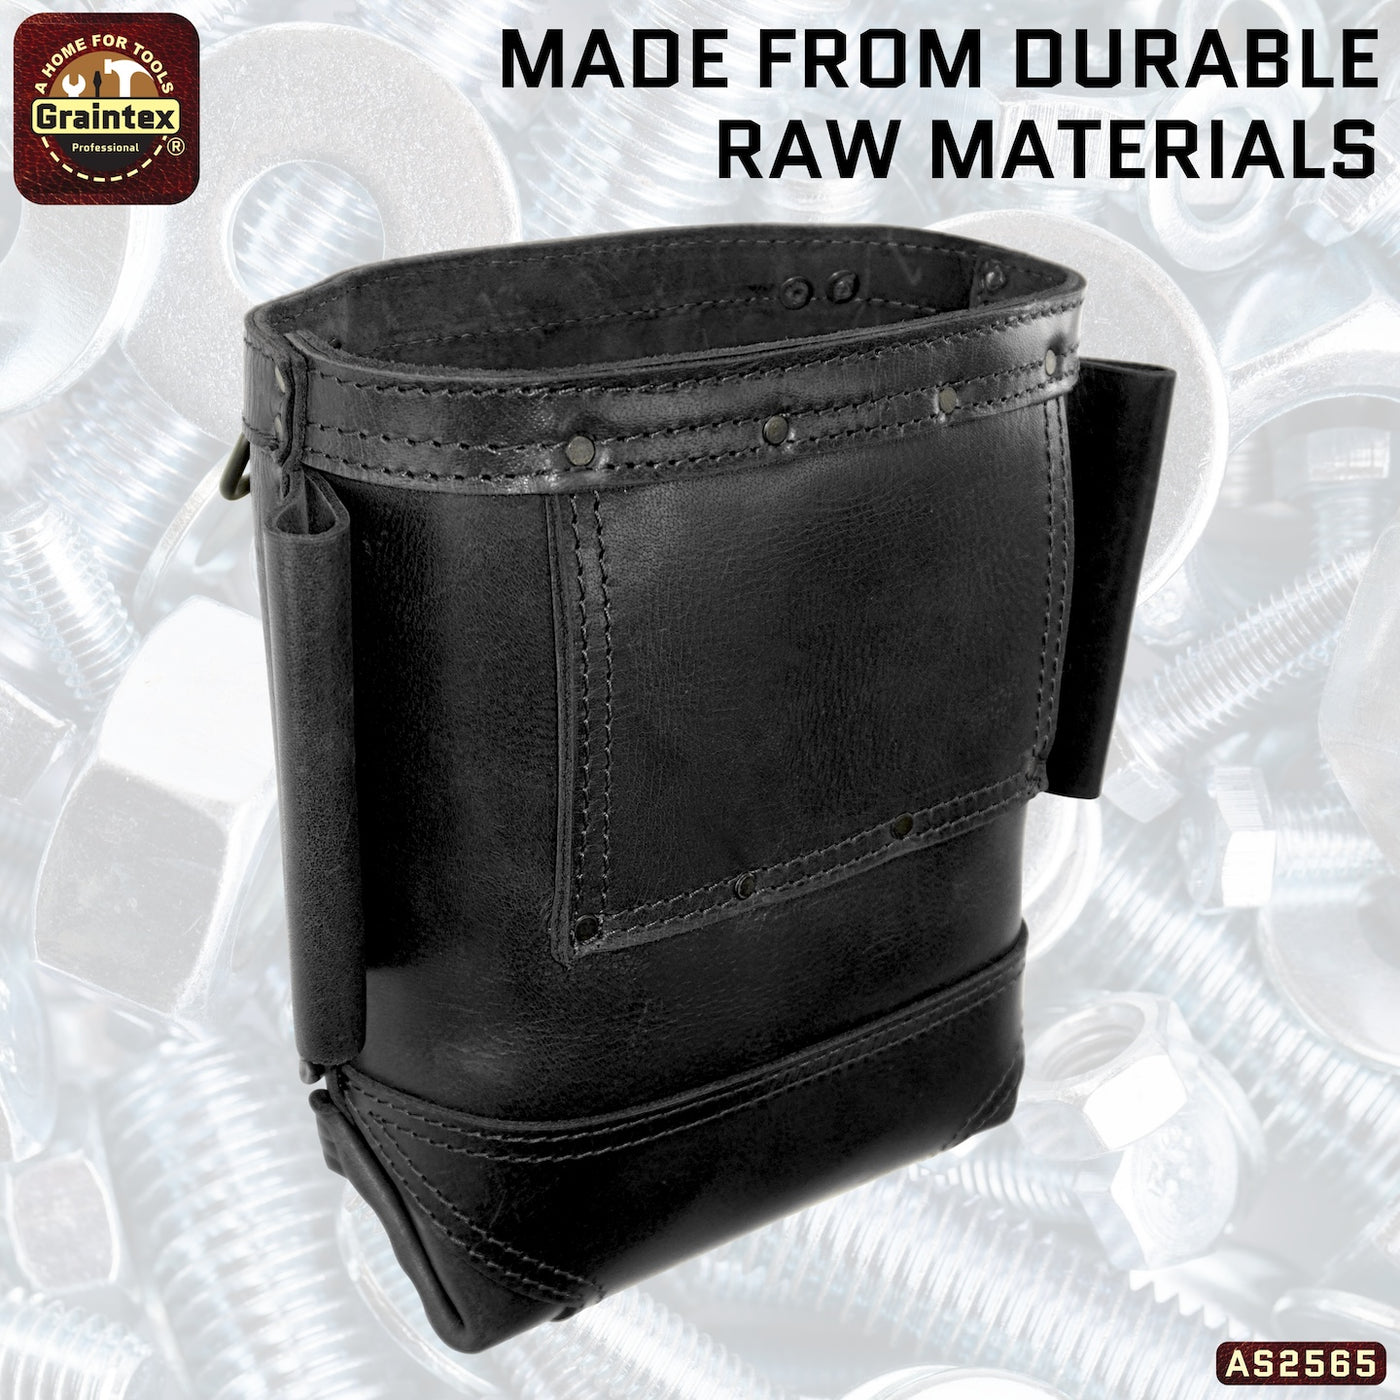 AS2565 :: Nut and Bolt Bag Ambassador Series Black Color Top Grain Leather